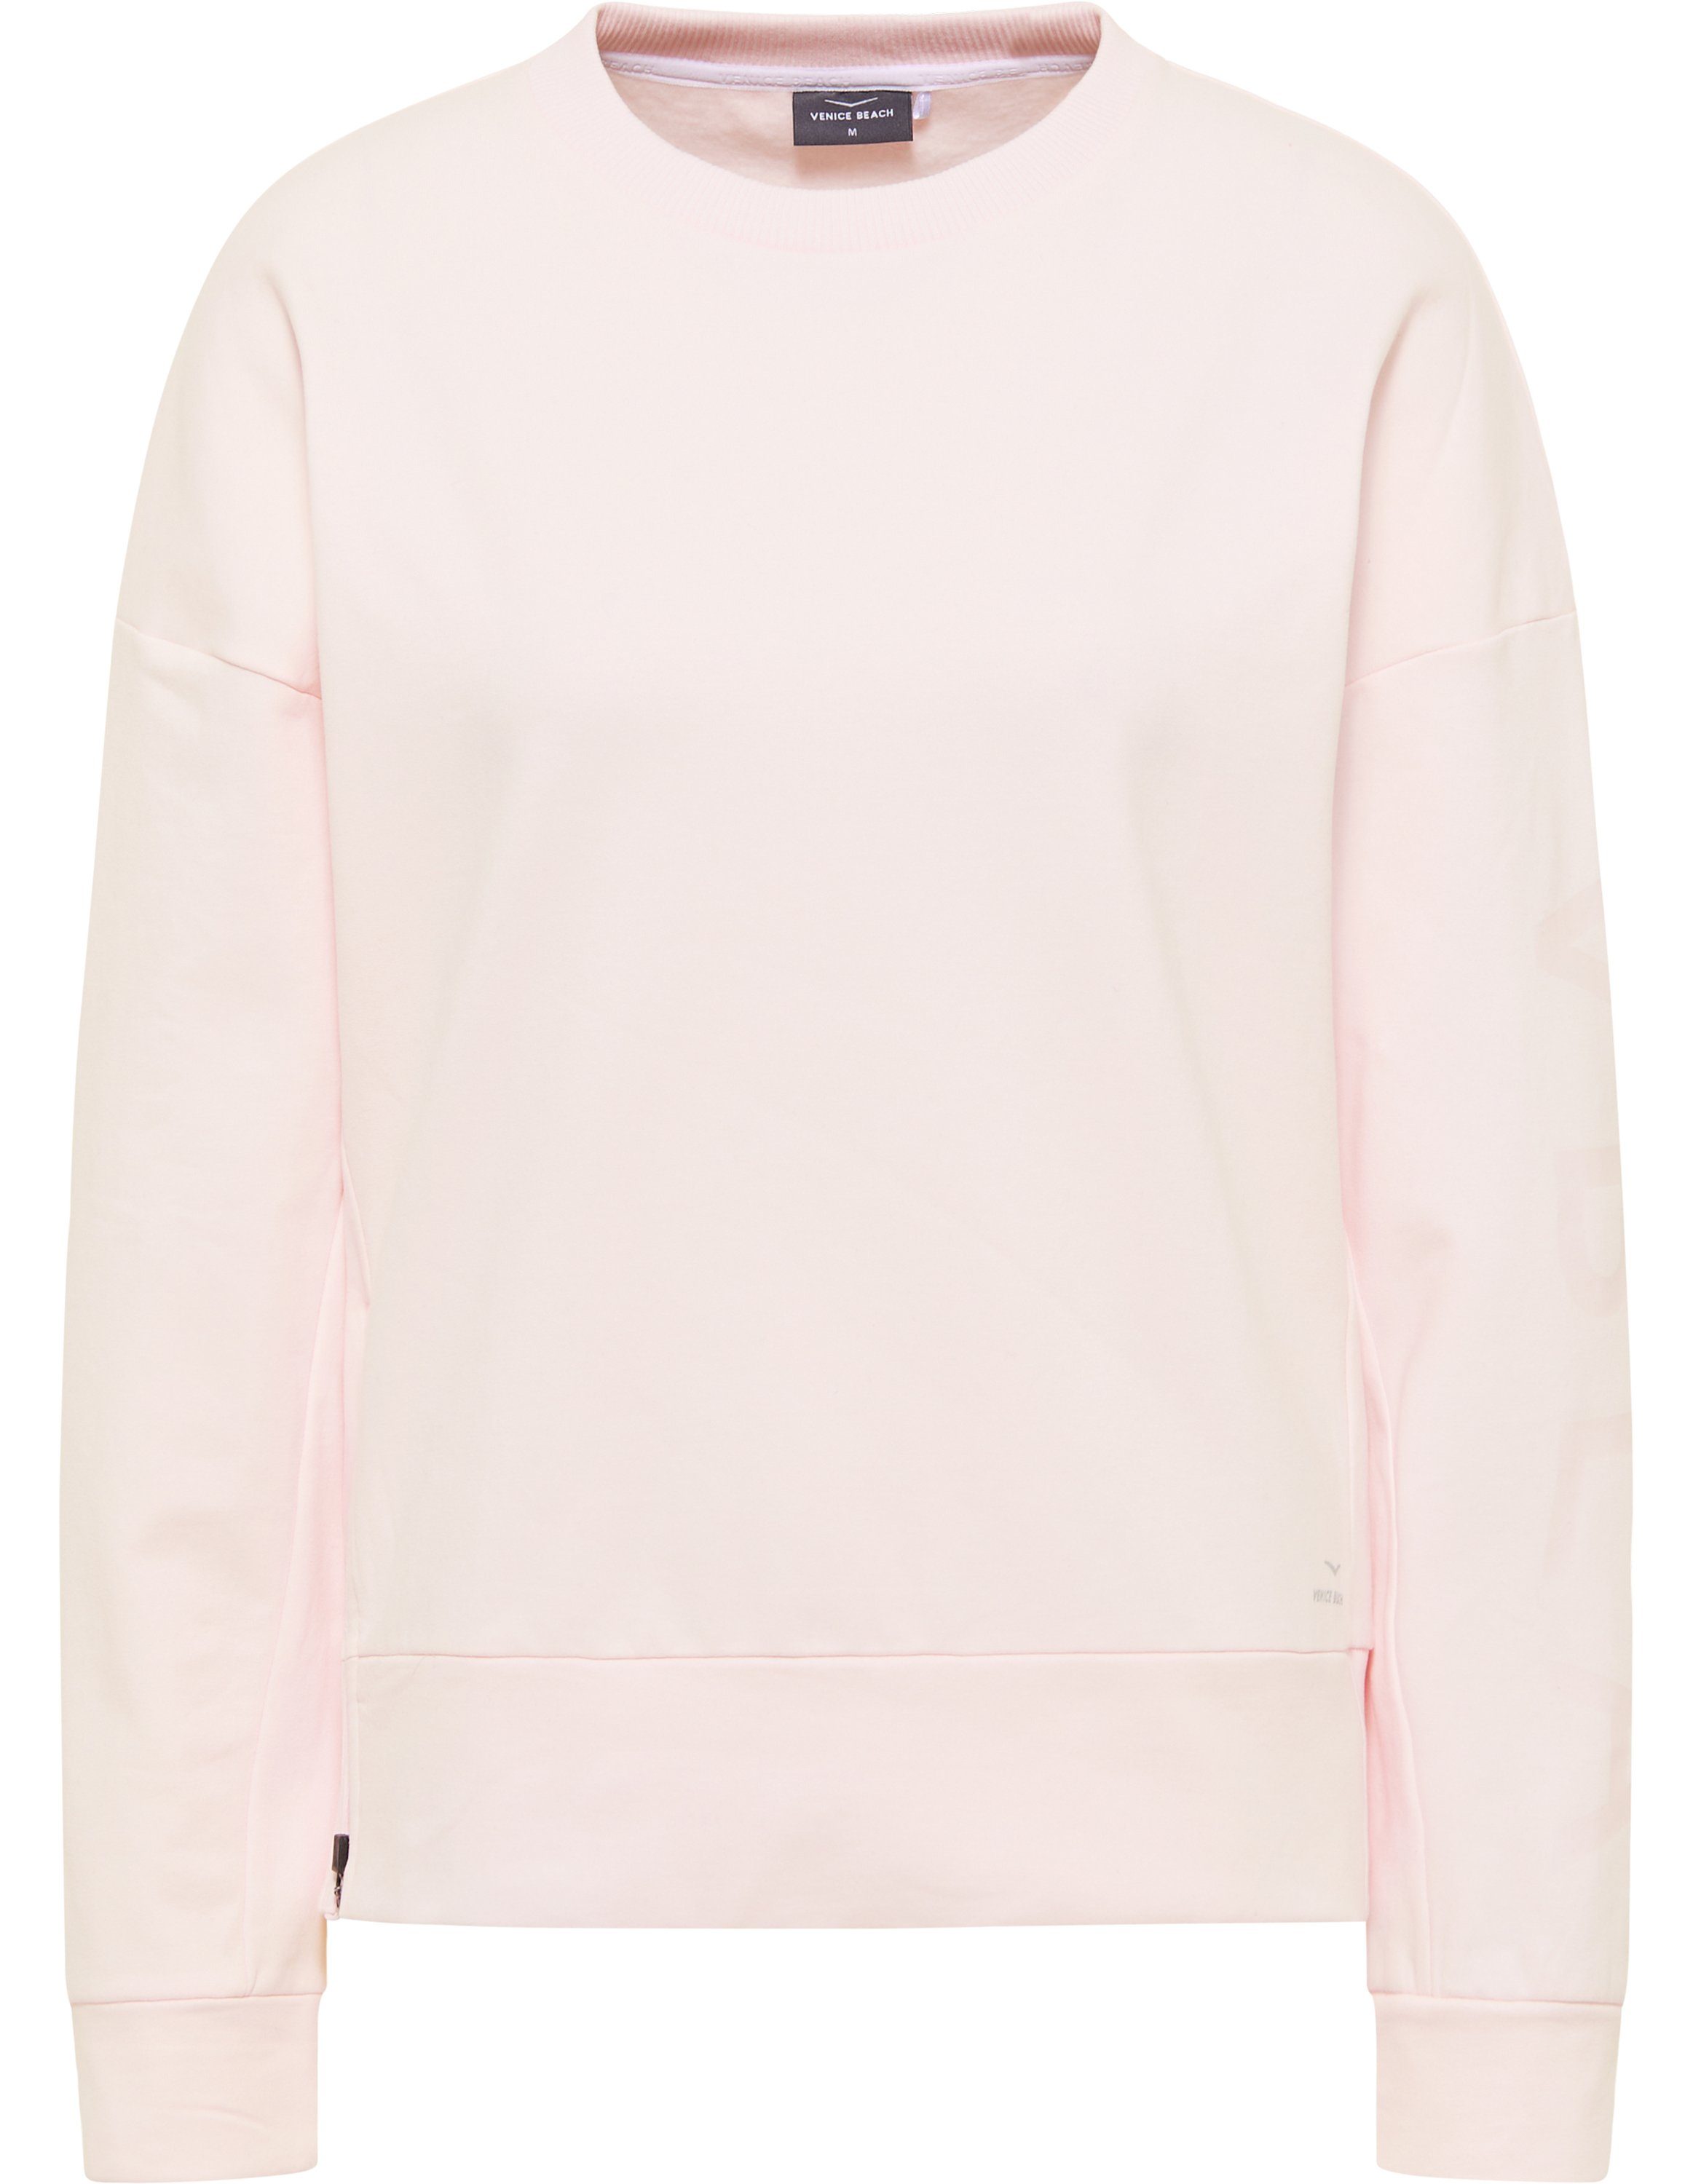 Sweatshirt Sweatshirt Venice Beach EMMA blush VB pink